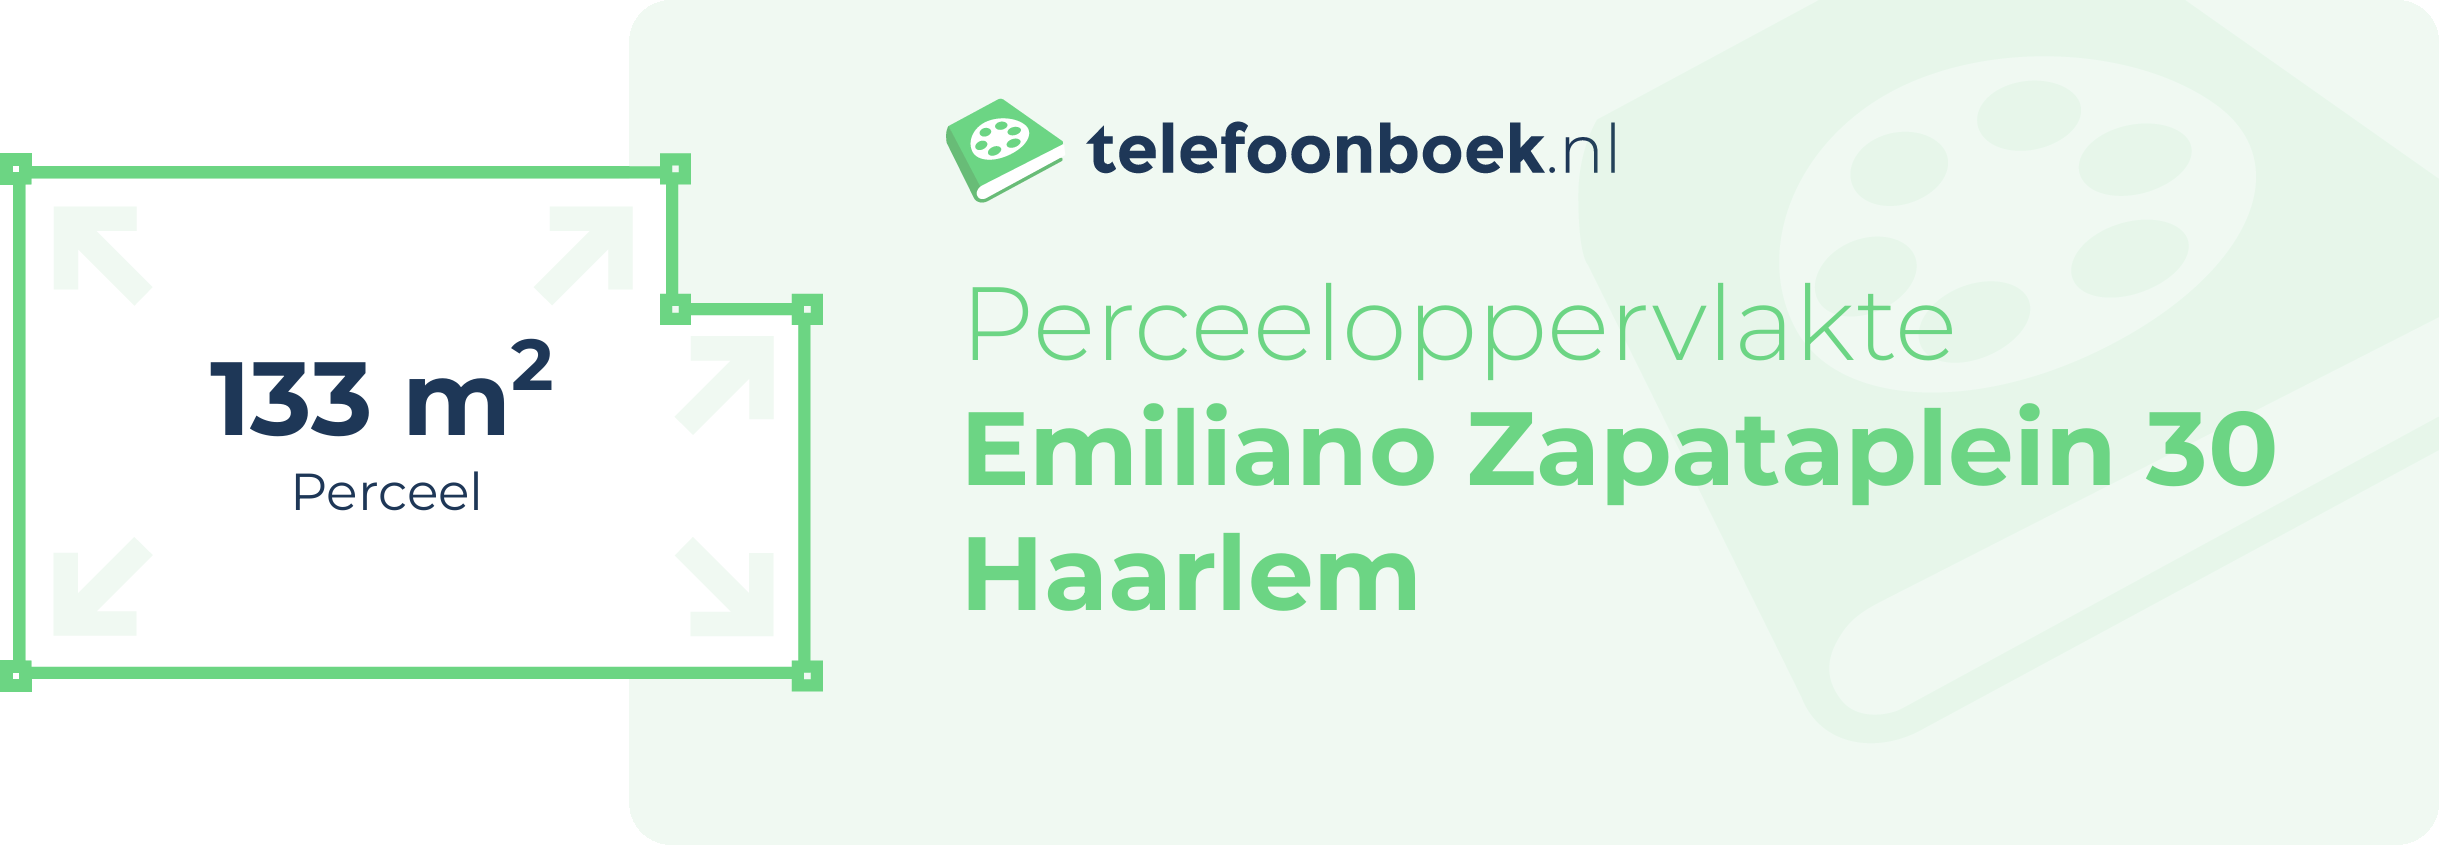 Perceeloppervlakte Emiliano Zapataplein 30 Haarlem